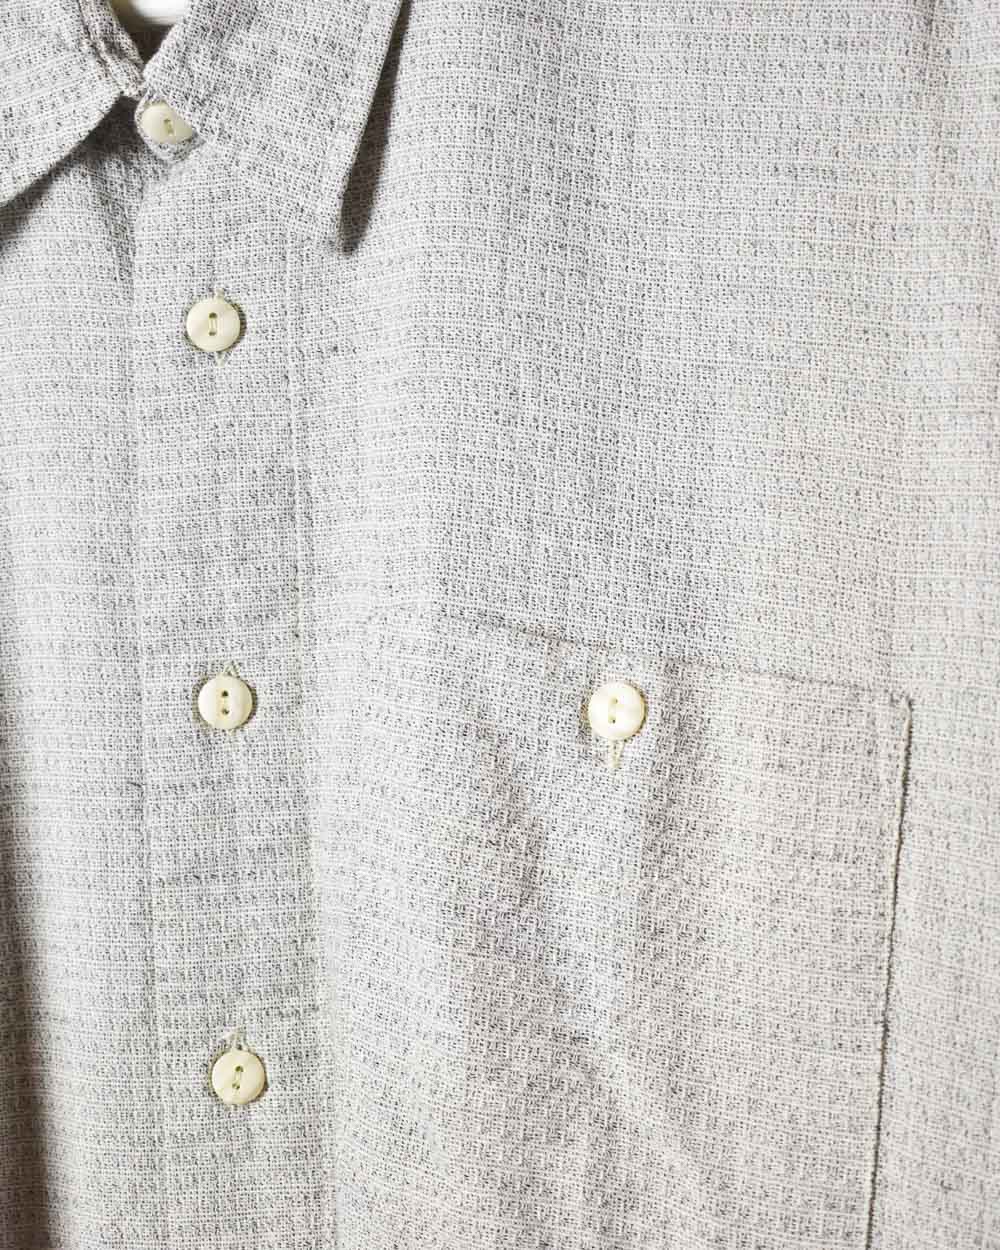 Stone Textured Short Sleeved Shirt - X-Large